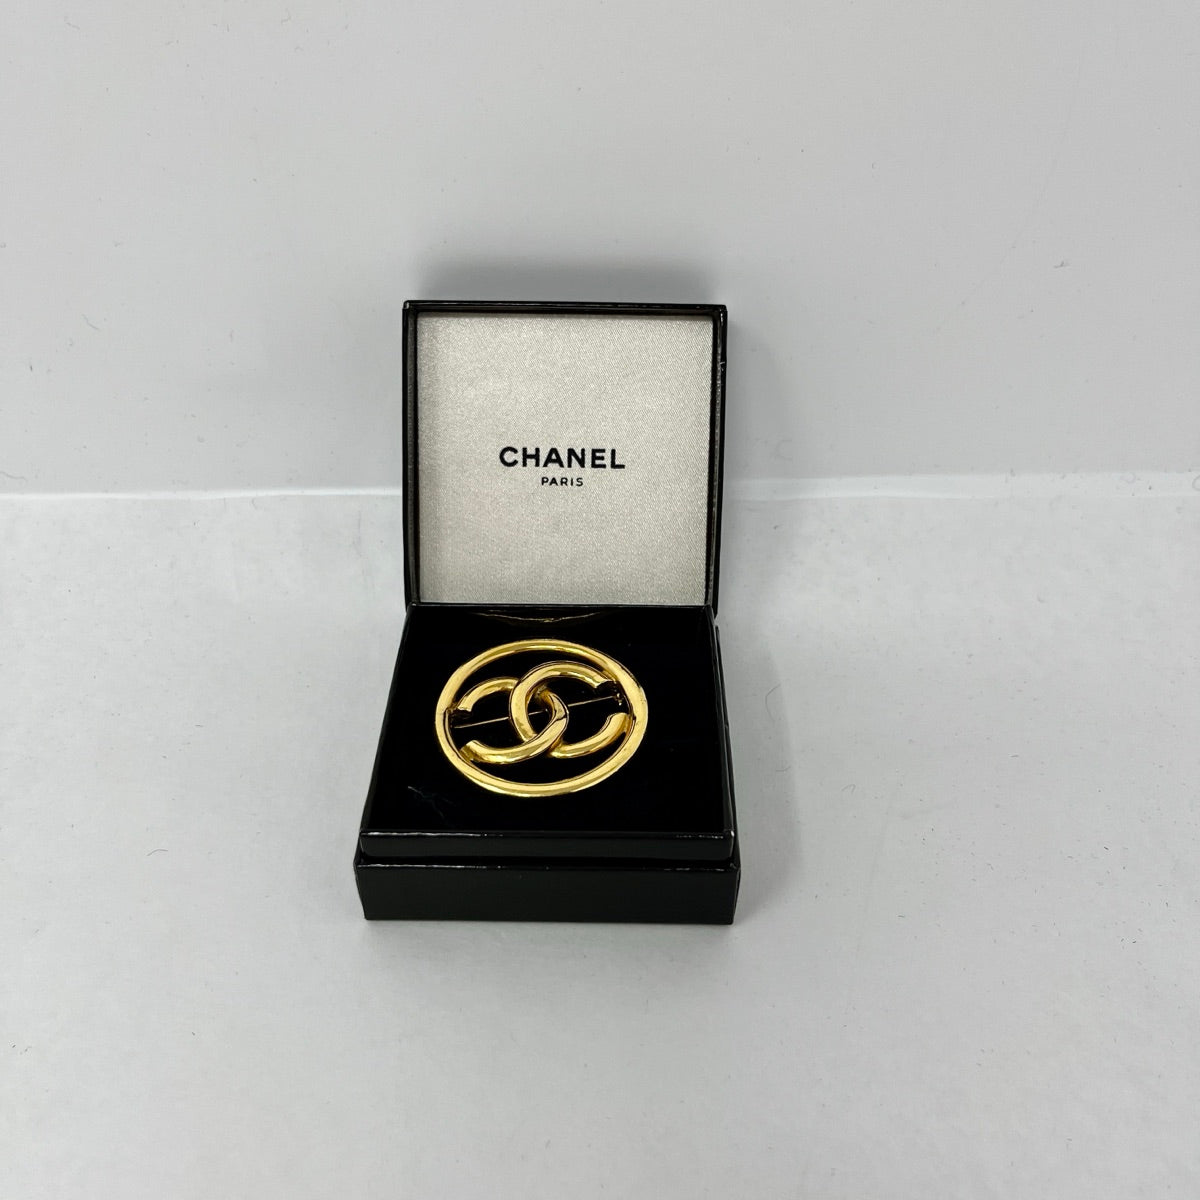 Chanel 1993 Pin/Brooch